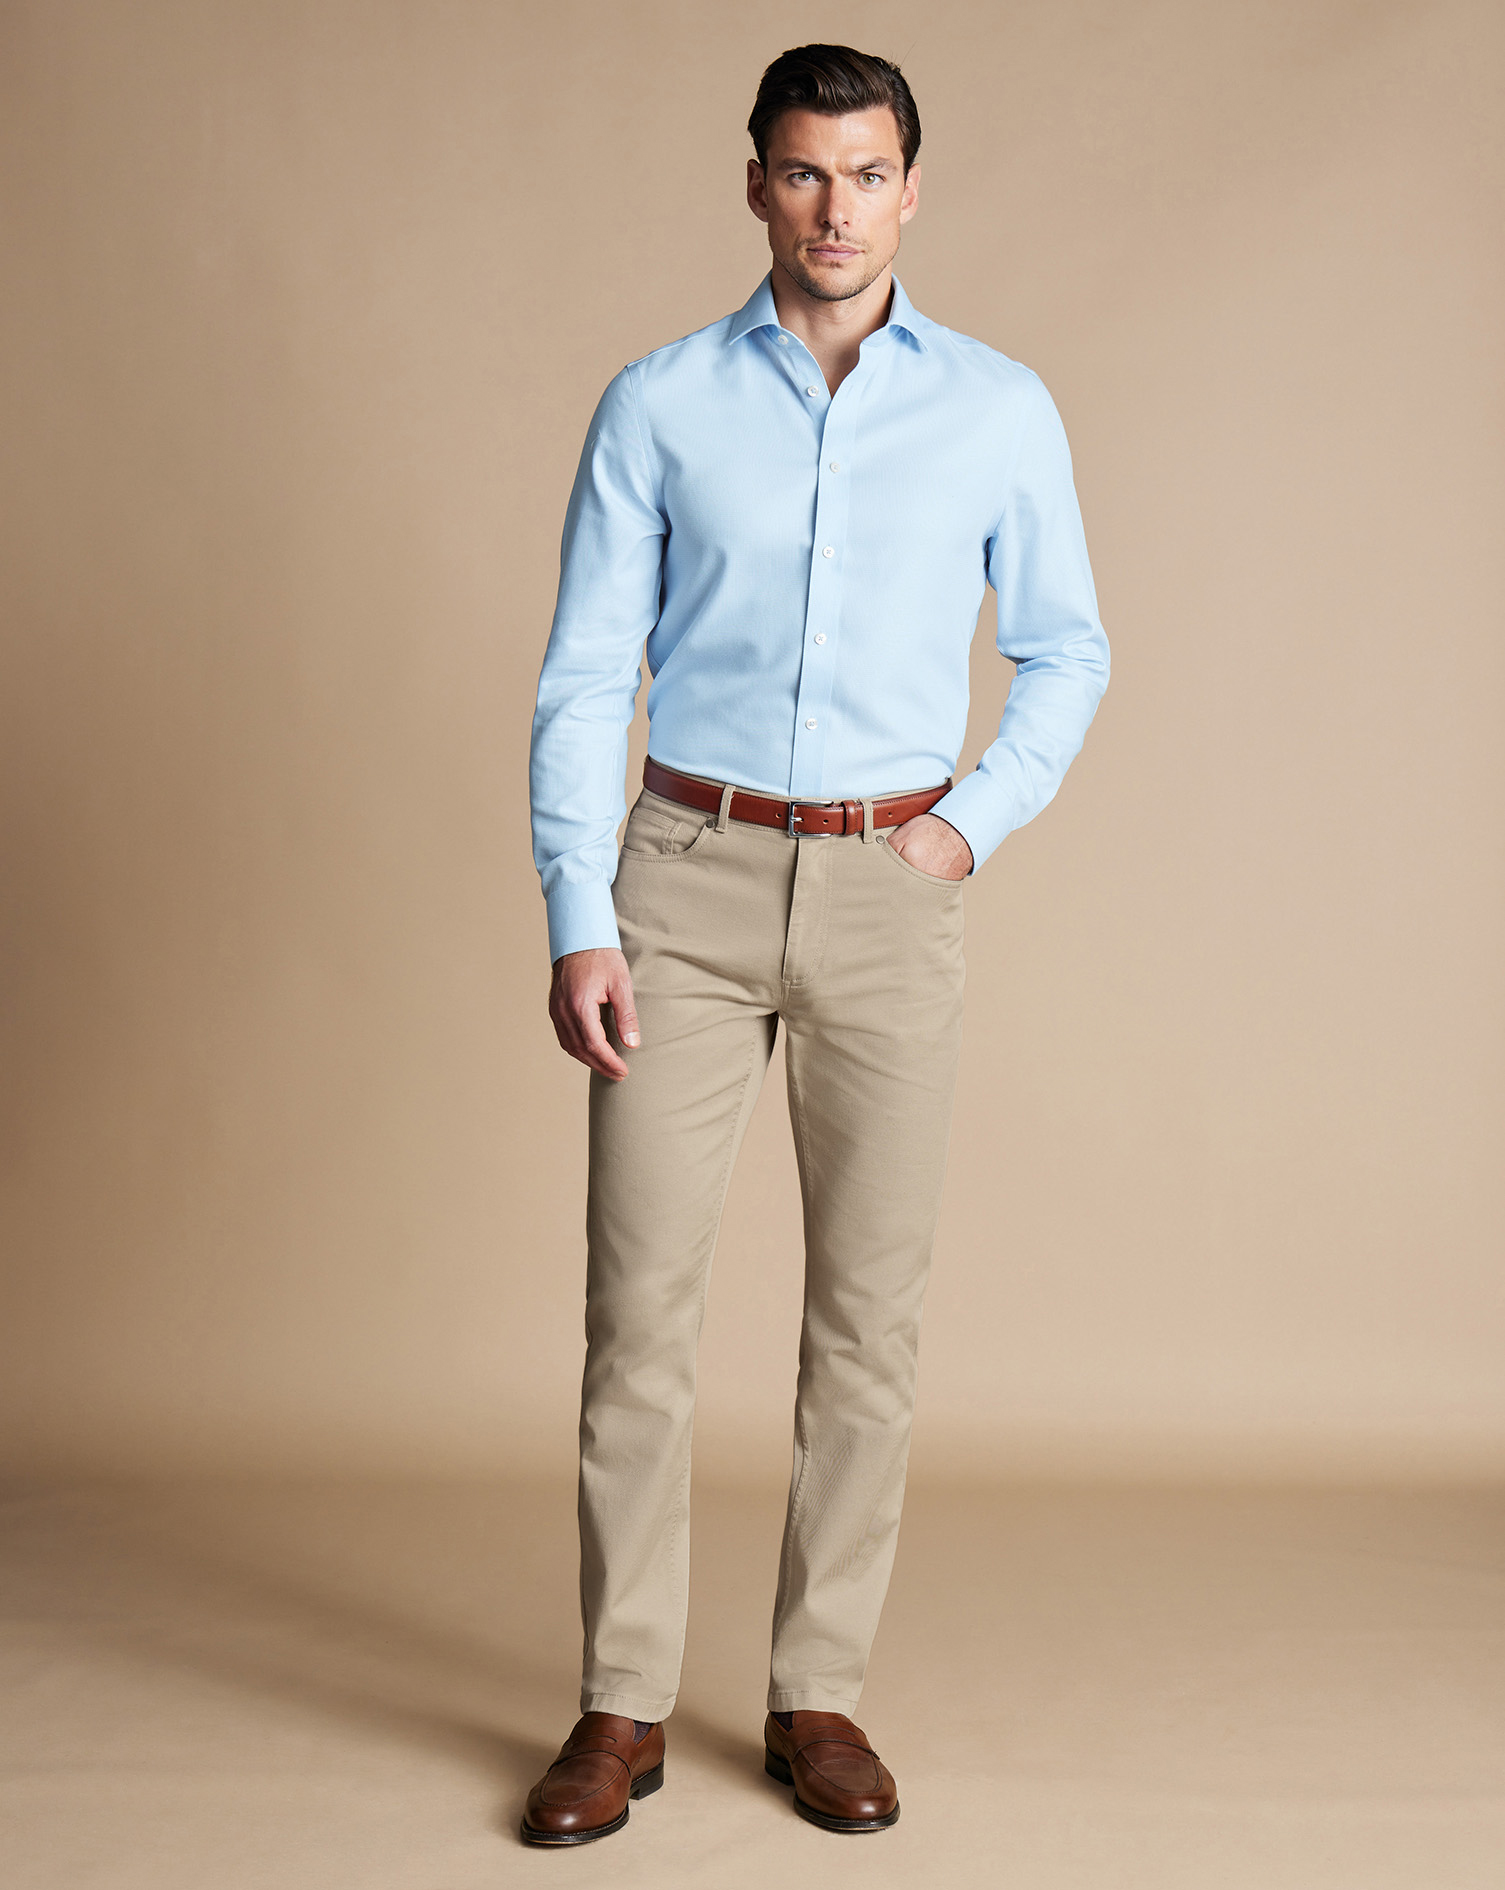 Men's Charles Tyrwhitt Twill 5 Pocket Jeans - Stone Neutral Size W32 L30 Cotton
